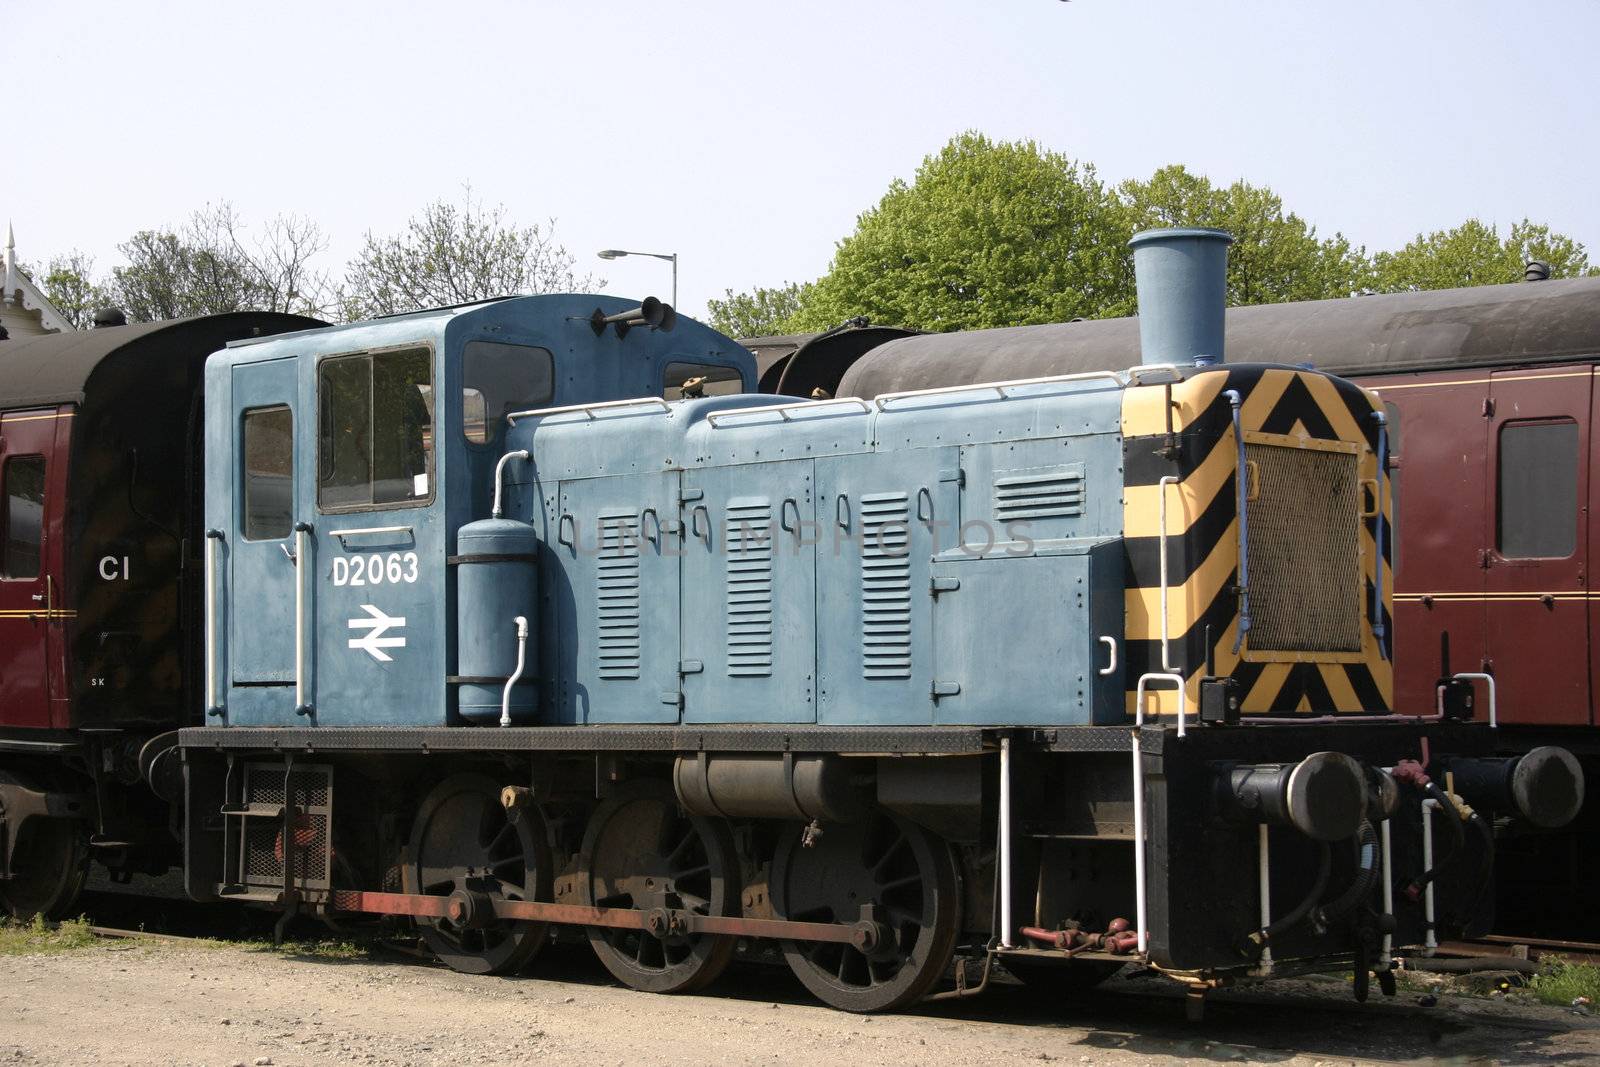 small diesel engine on the railways